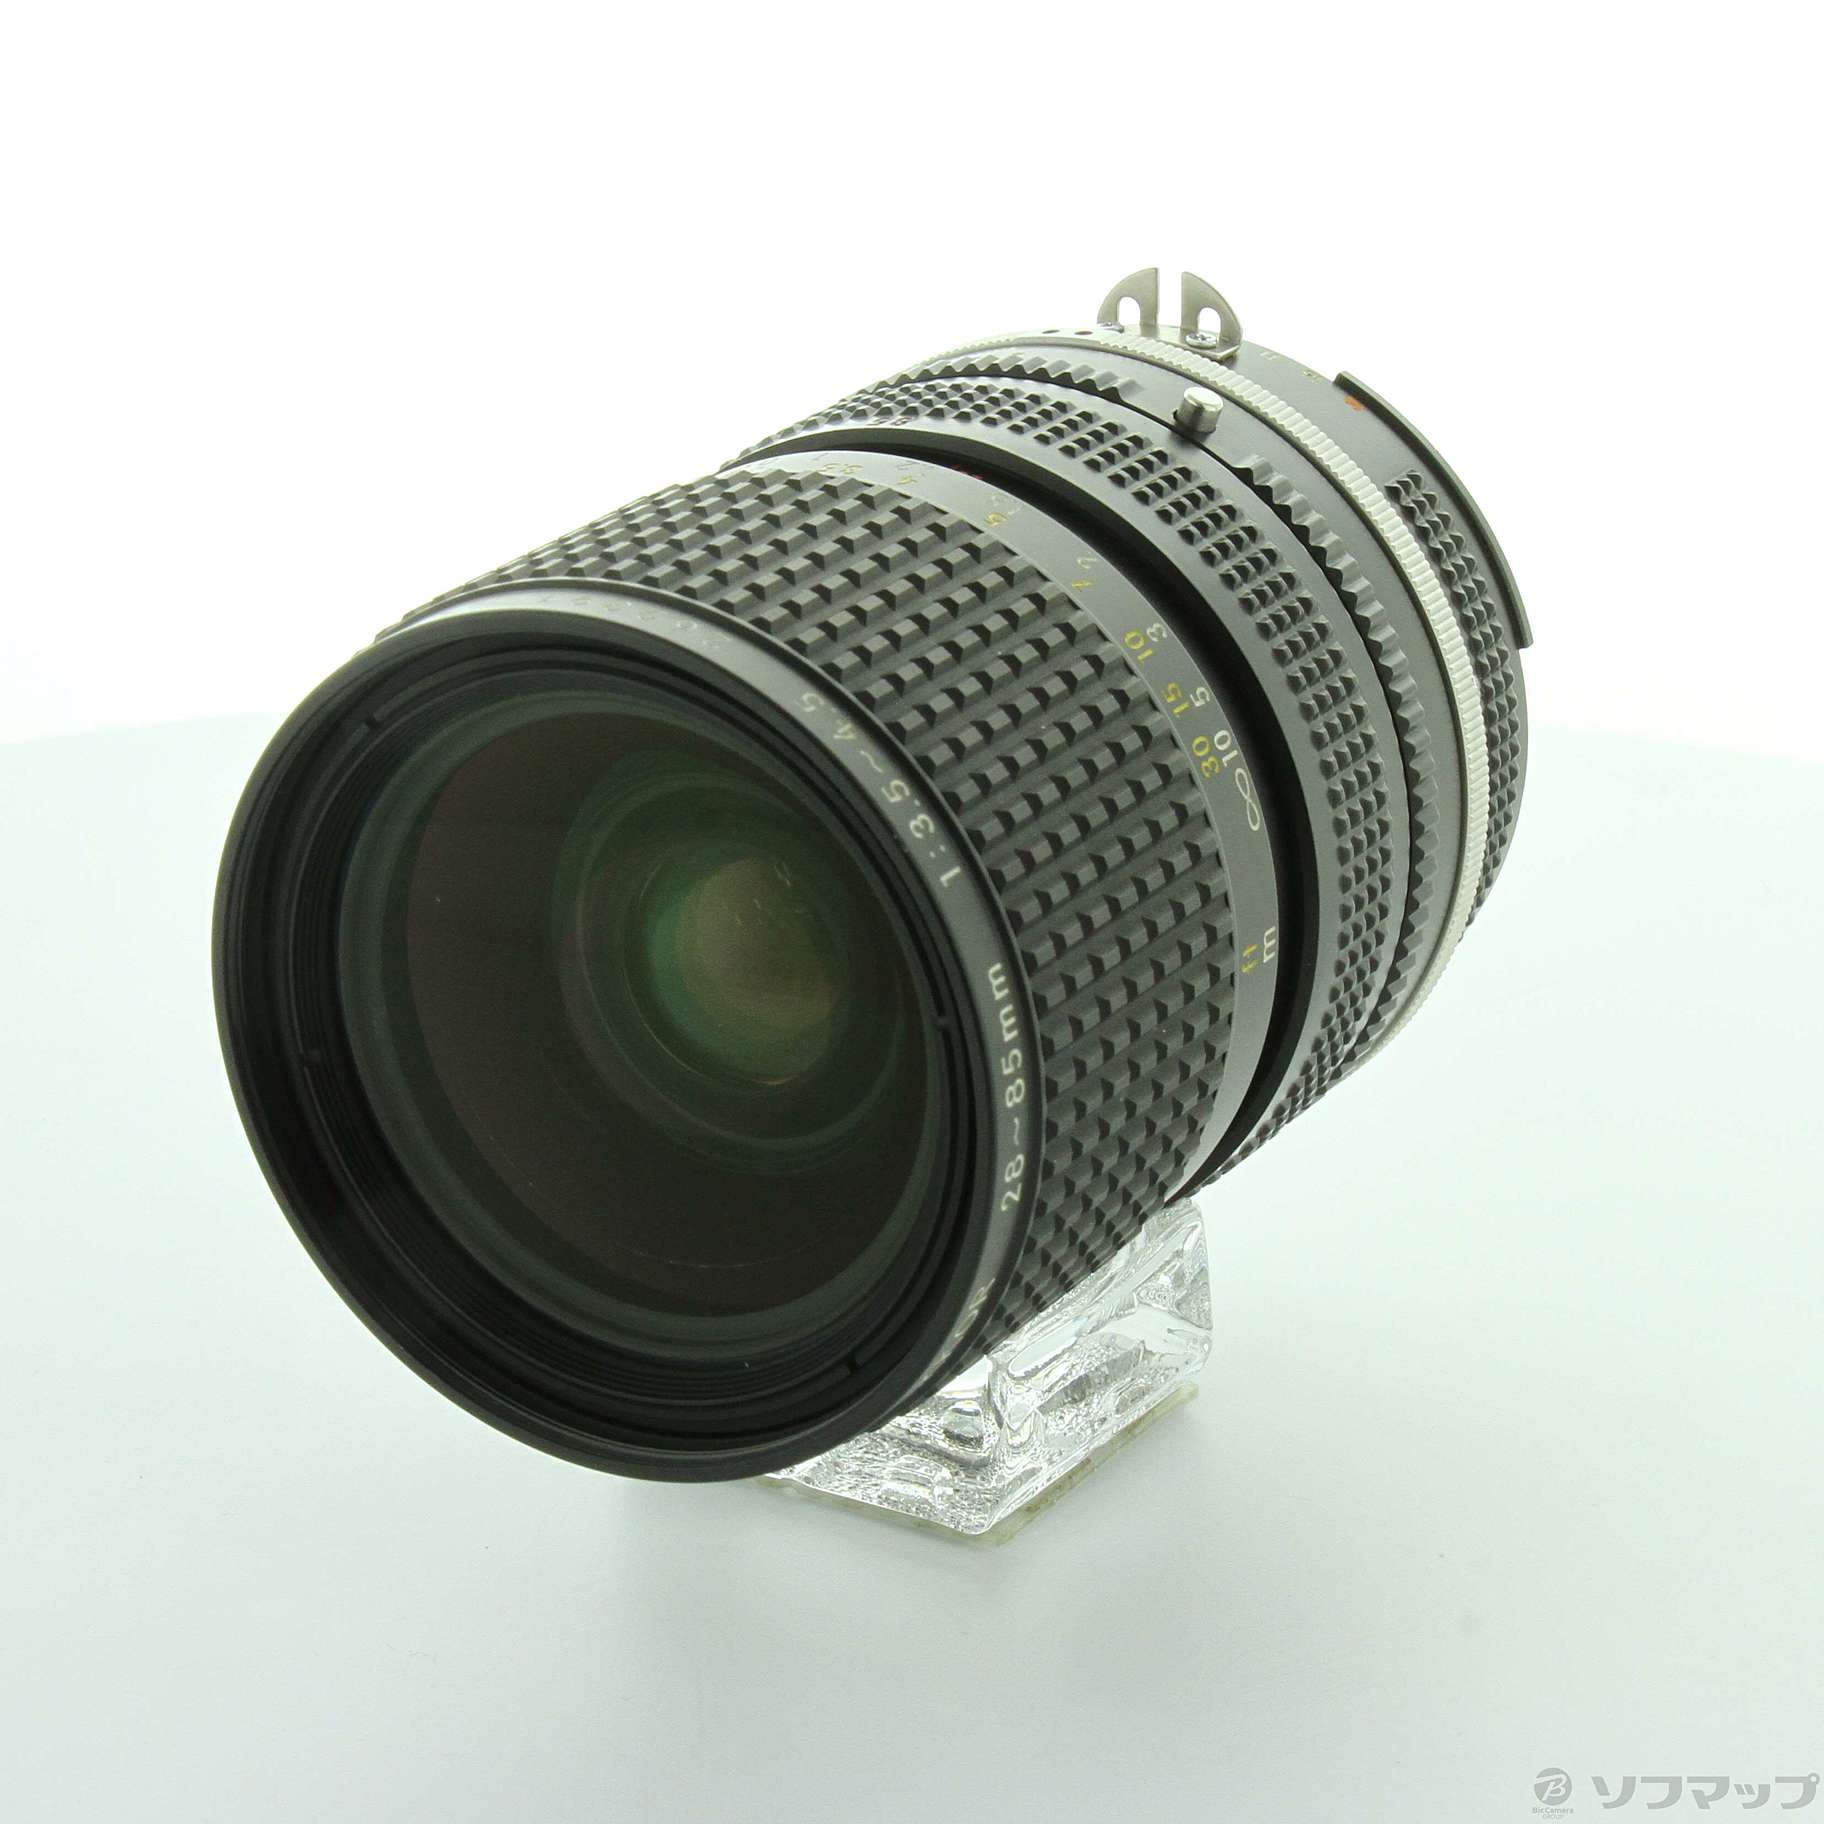 NIkon AI-S Zoom NIKKOR 28-85mm F3.5-4.5 - レンズ(単焦点)